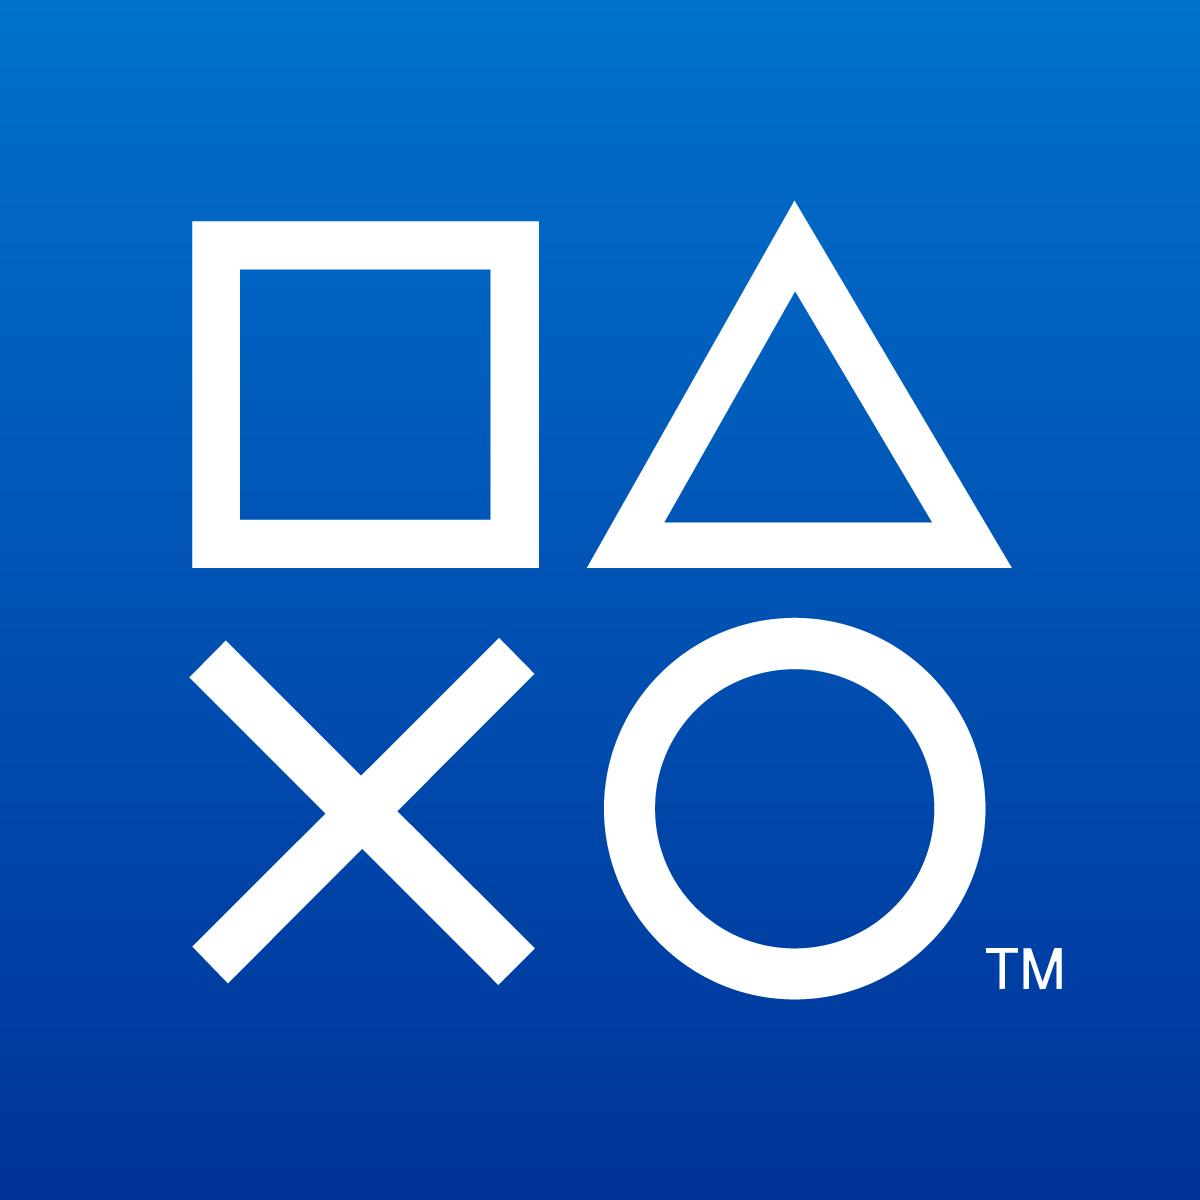 PSX Logo - PSX PlayStation Experience App Icon Logo Vector | Free Vector ...